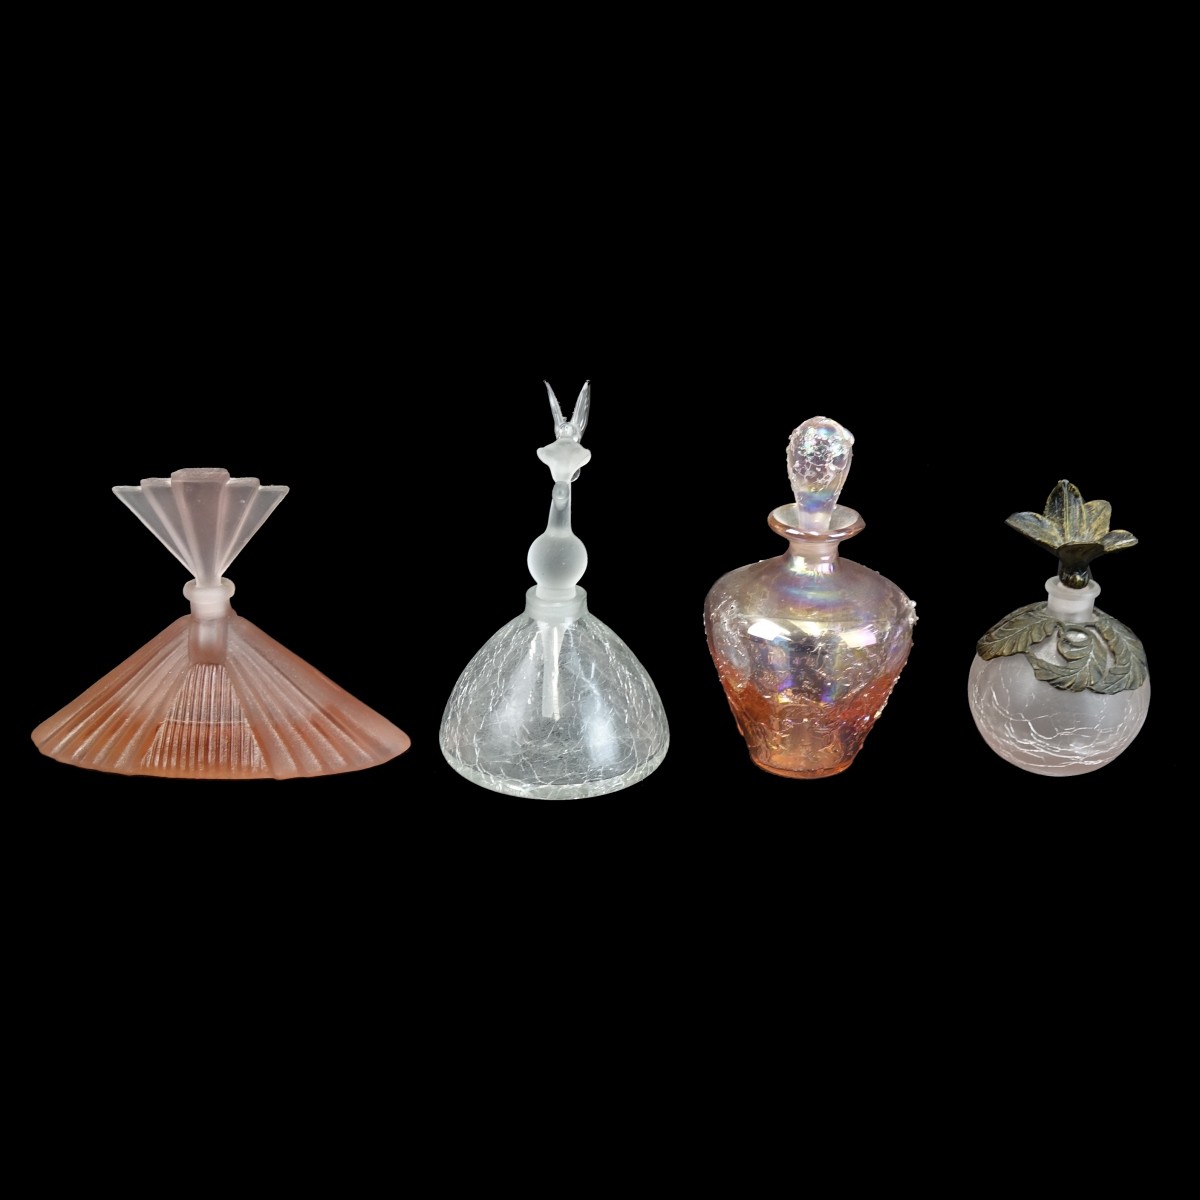 Four (4) Vintage Art Deco Glass Perfume Bottles